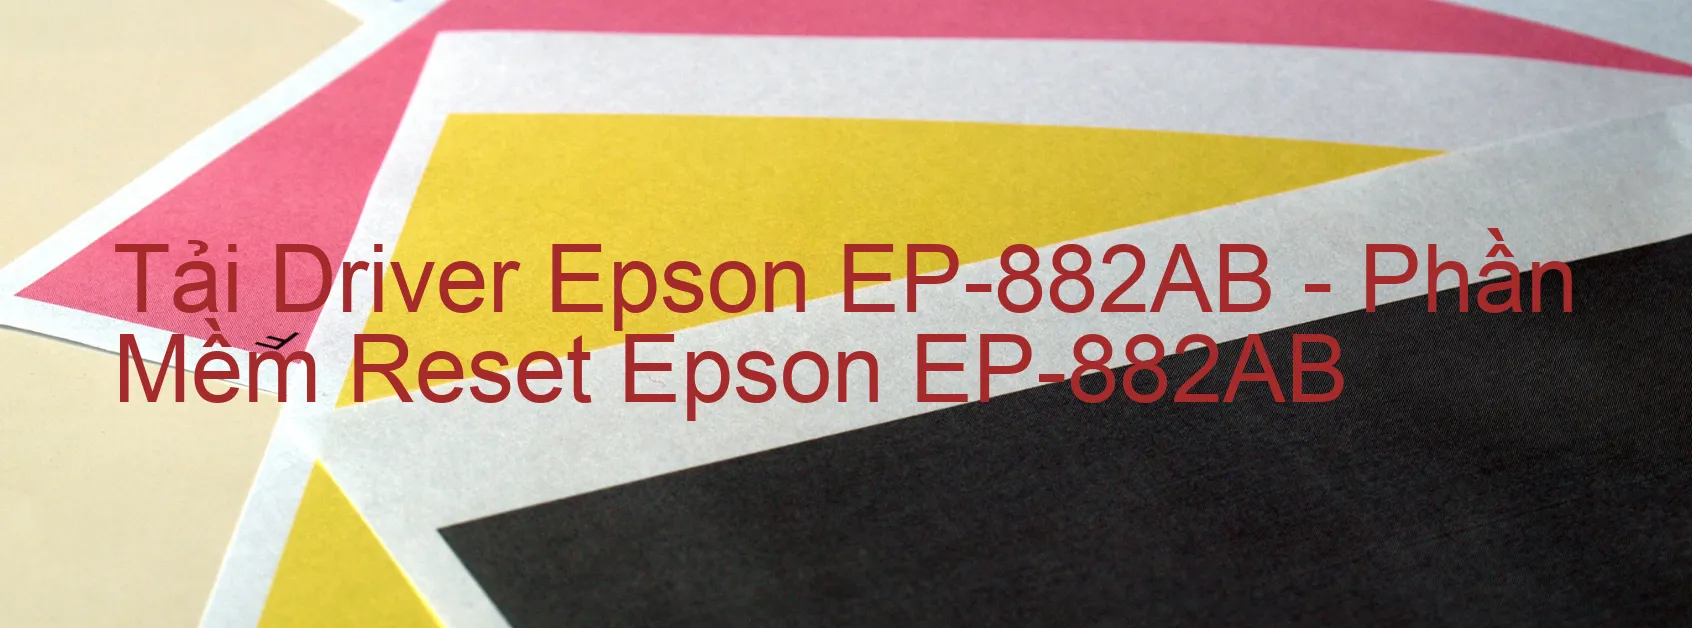 Driver Epson EP-882AB, Phần Mềm Reset Epson EP-882AB